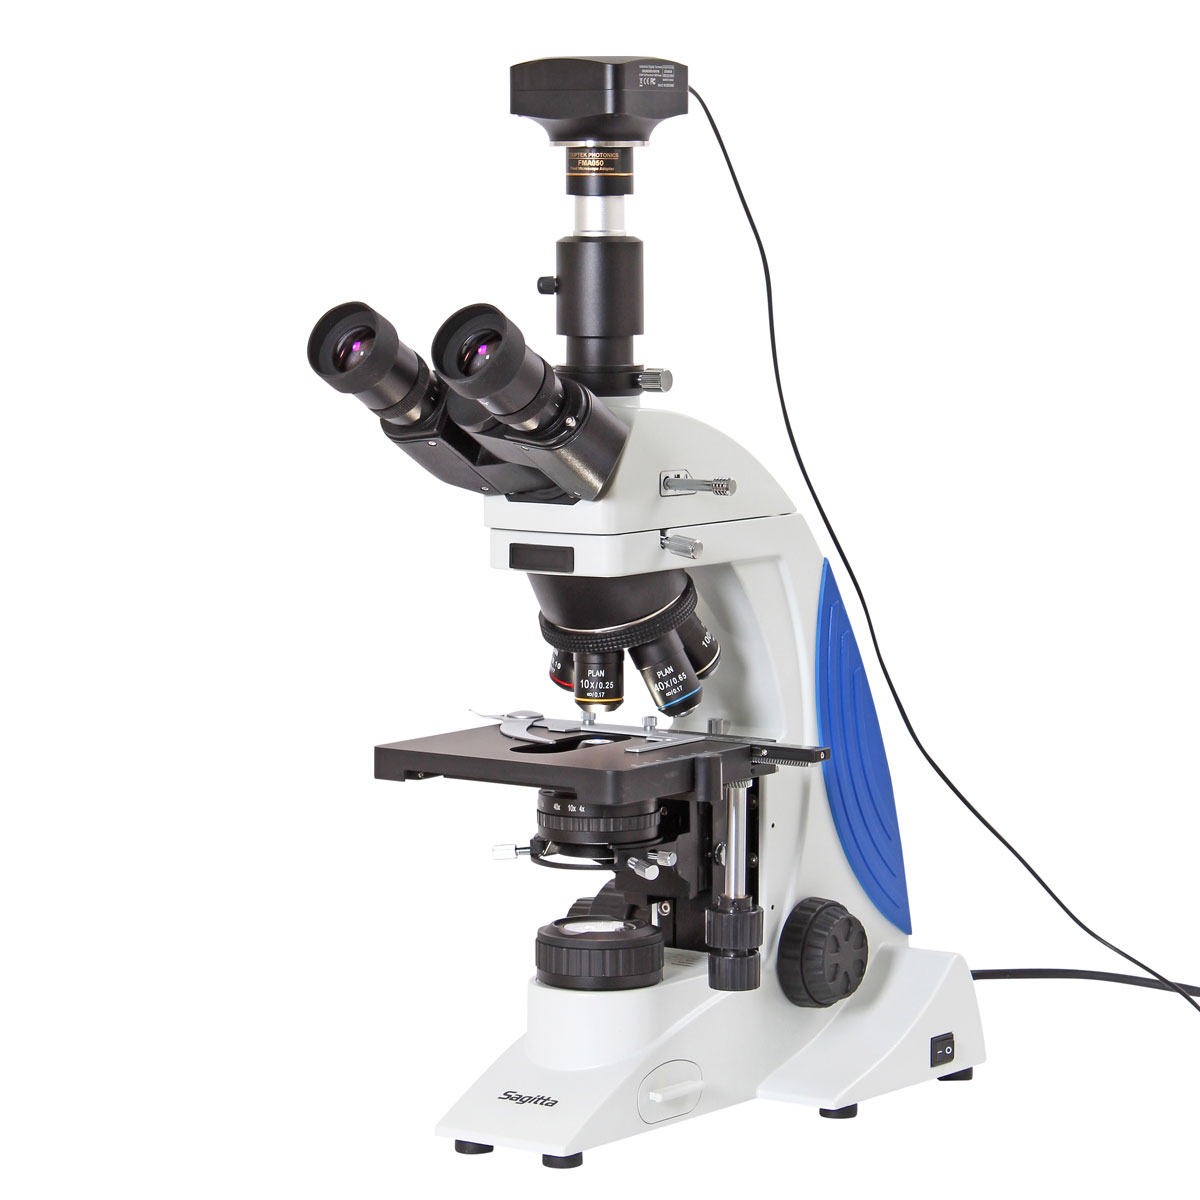 Mikroskop trinokulärt SL-700